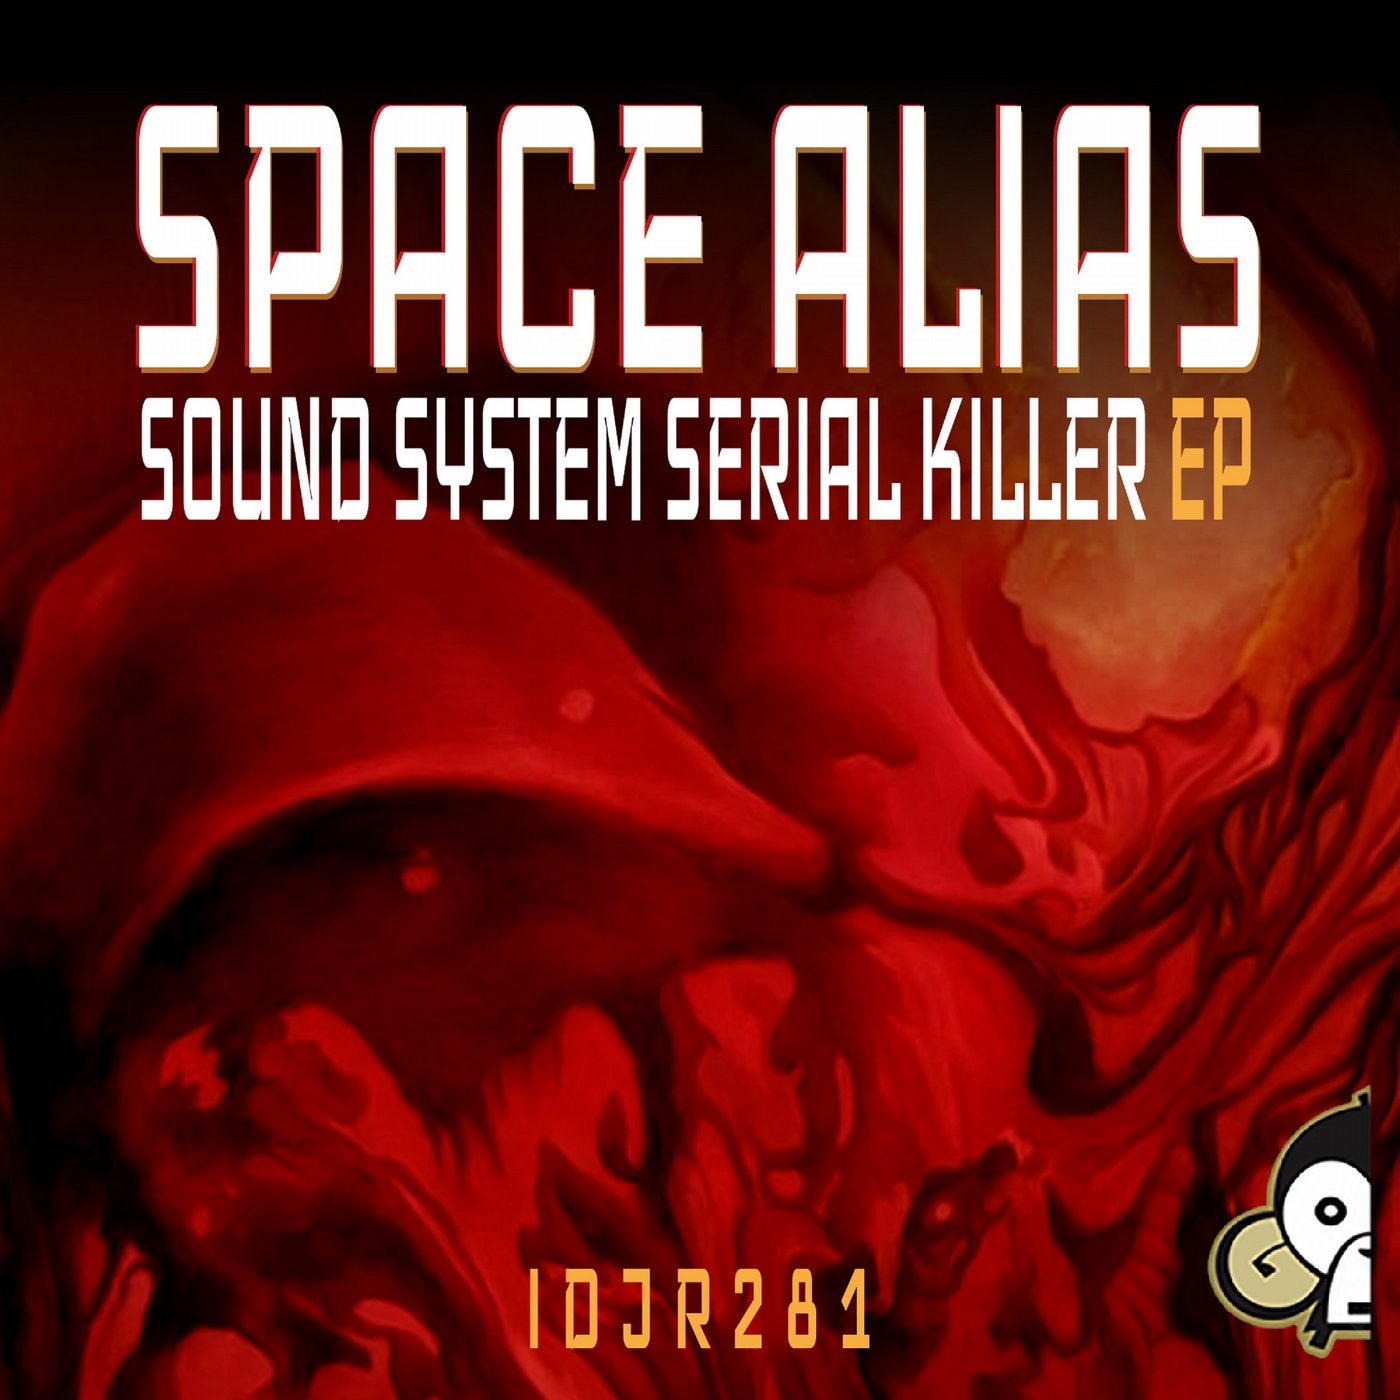 Sound System Serial Killer EP